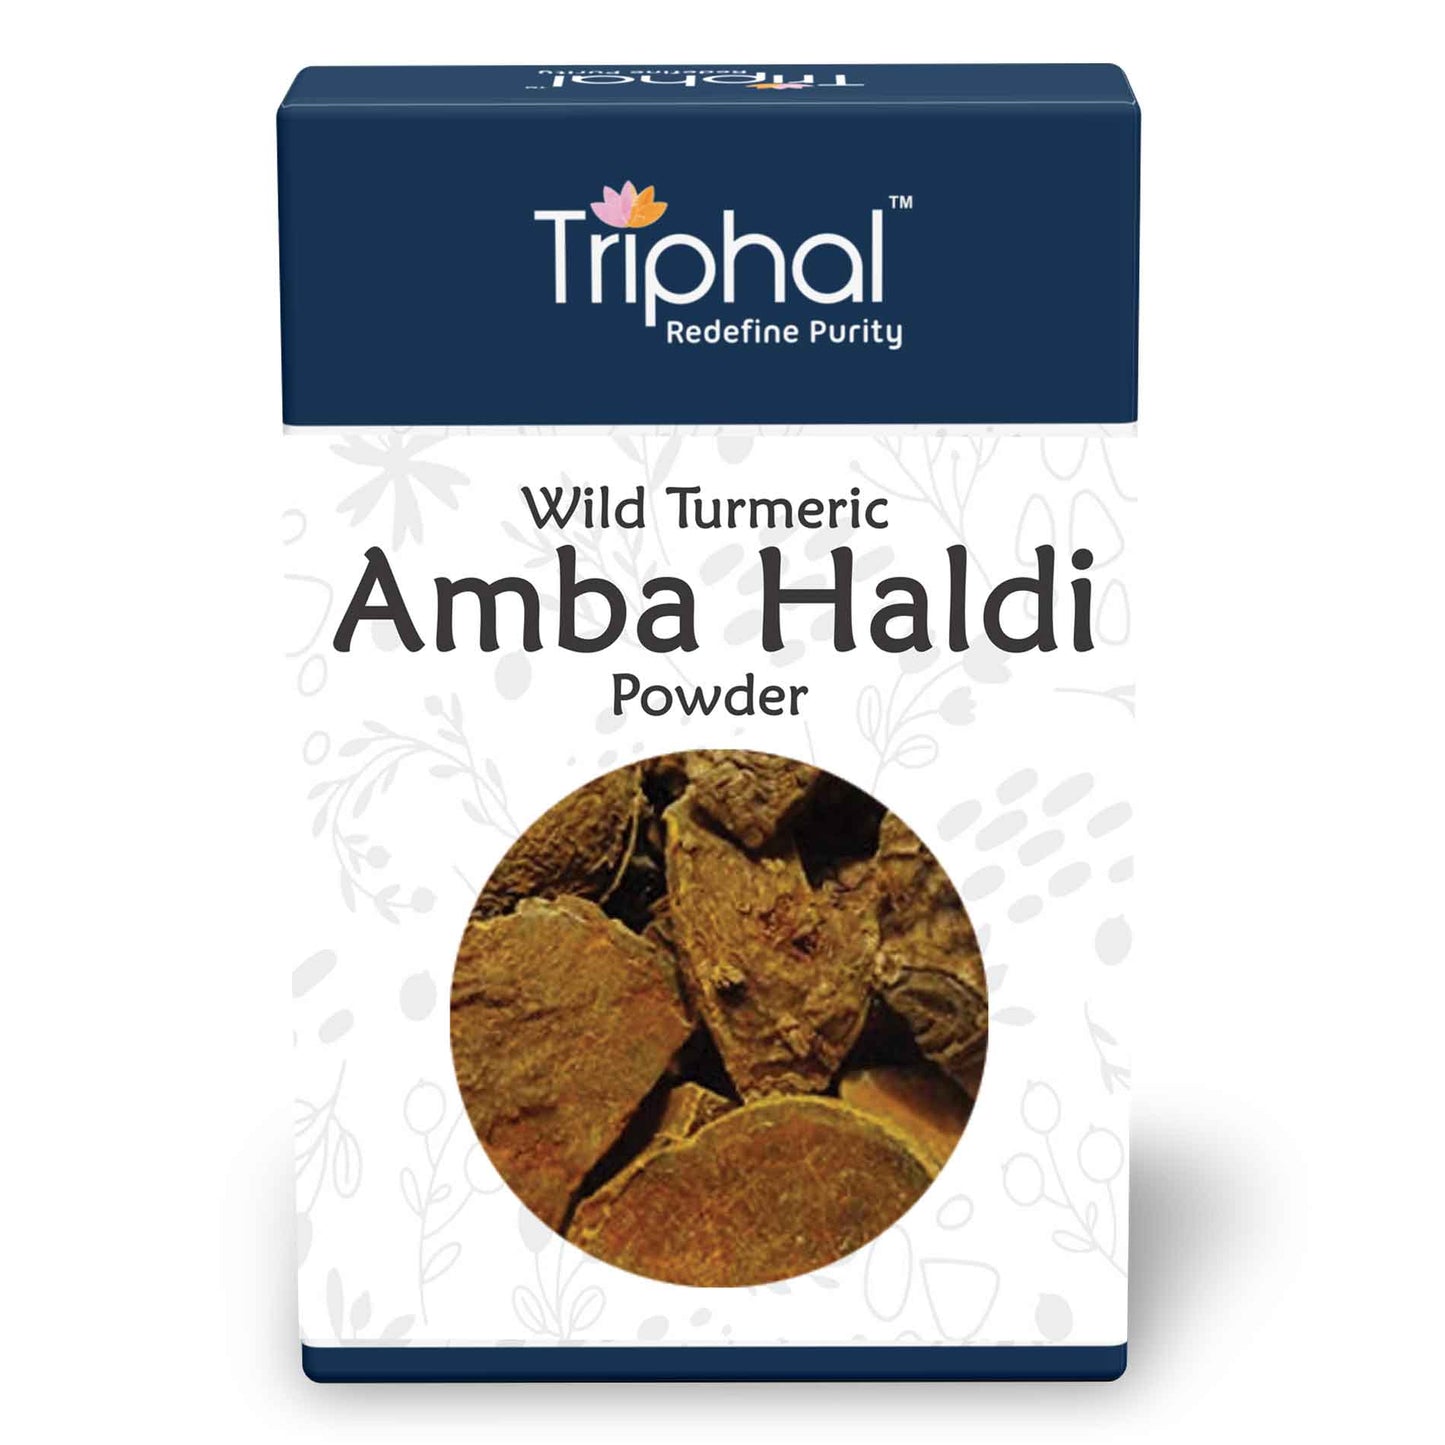 Triphal's Amba Haldi Powder - 100% Pure and Natural Curcuma Amada - Wild Turmeric - Mango Ginger - Aama Haldi